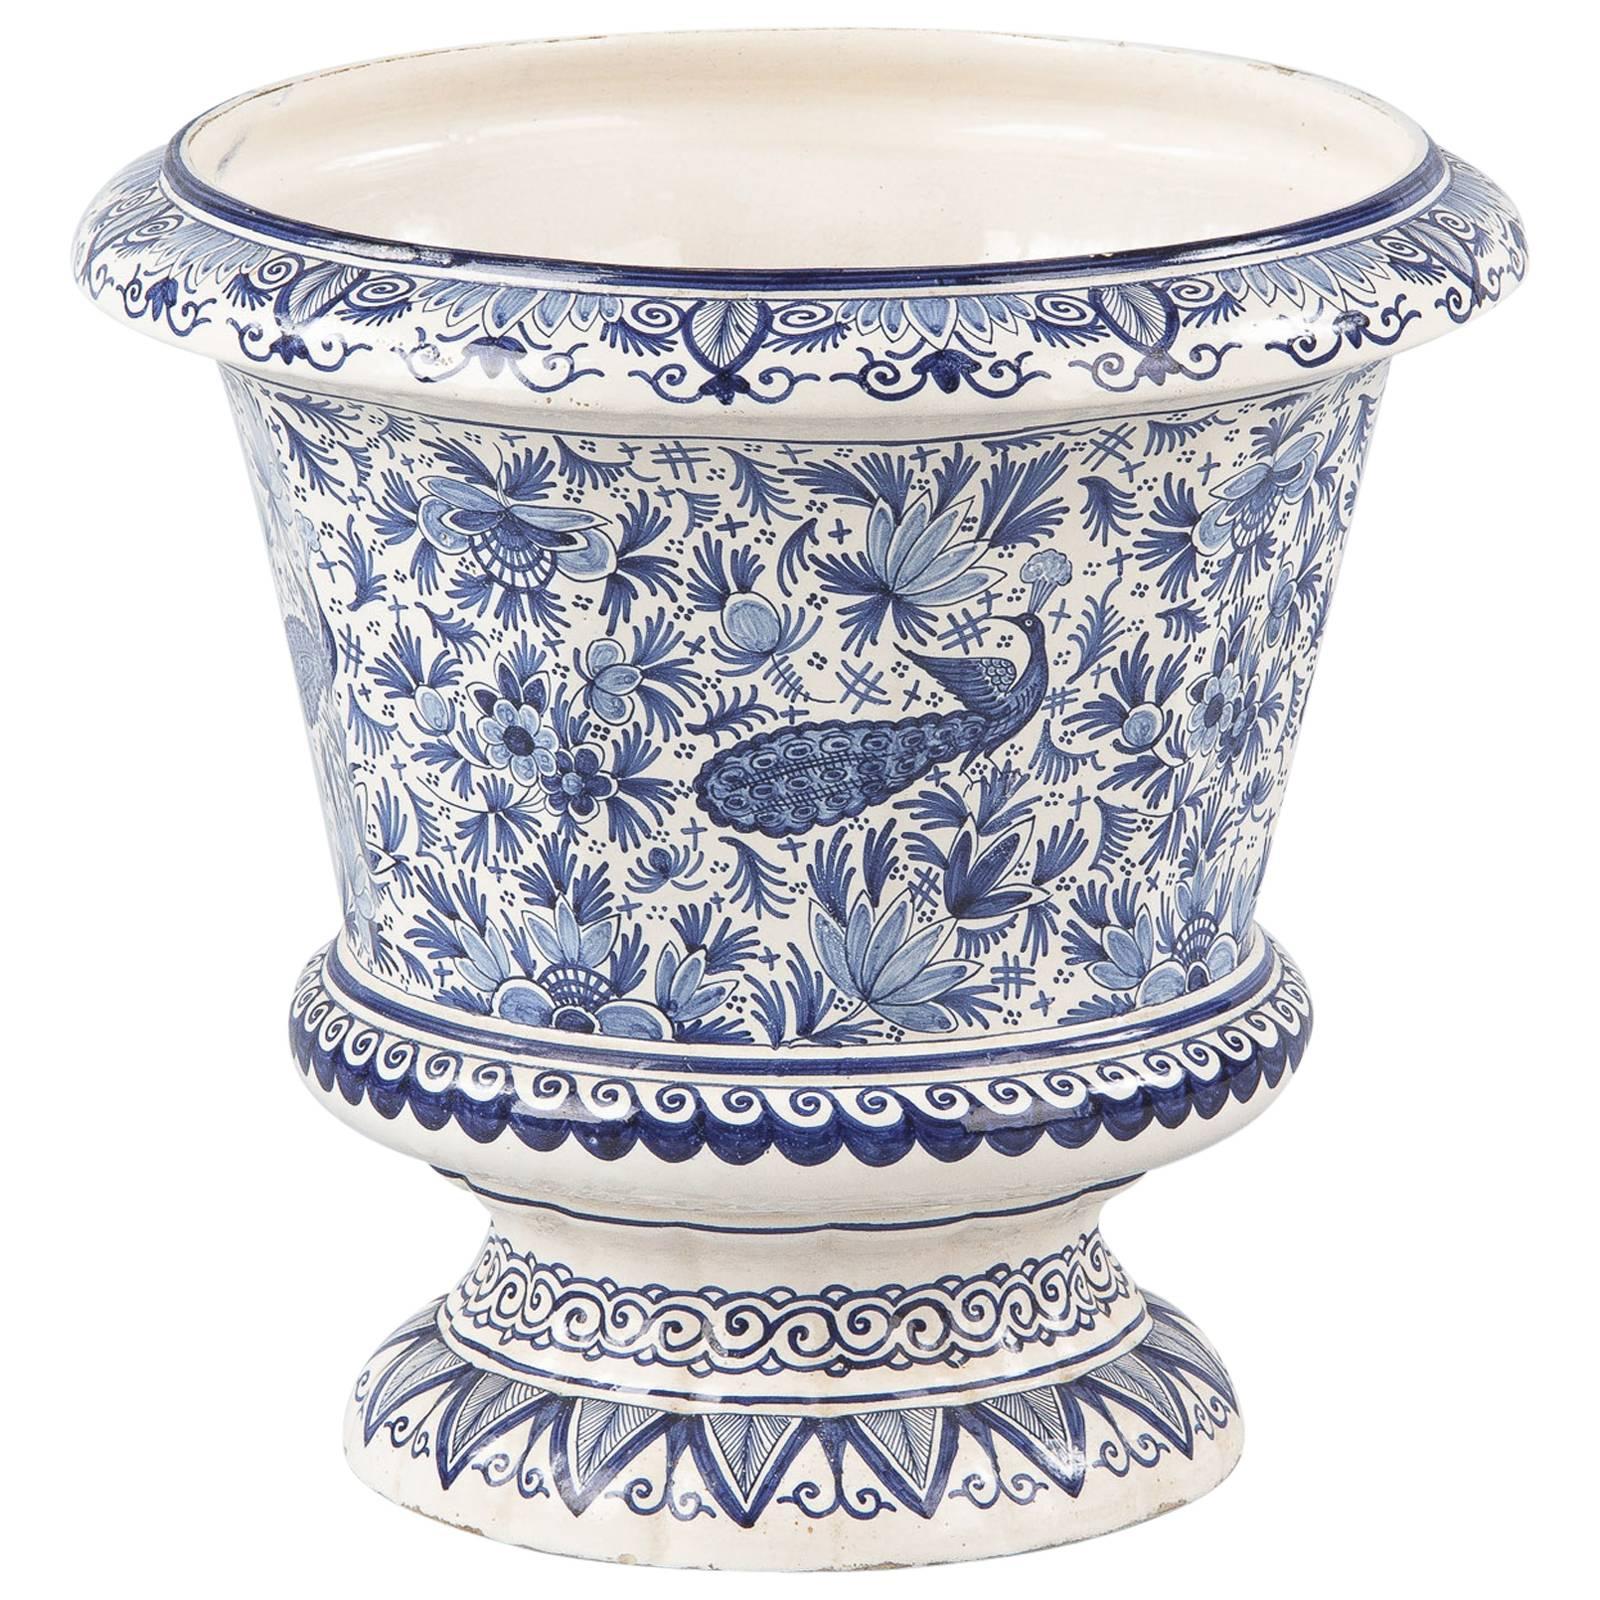 19th Century Blue and White Delft Ceramic Jardinière